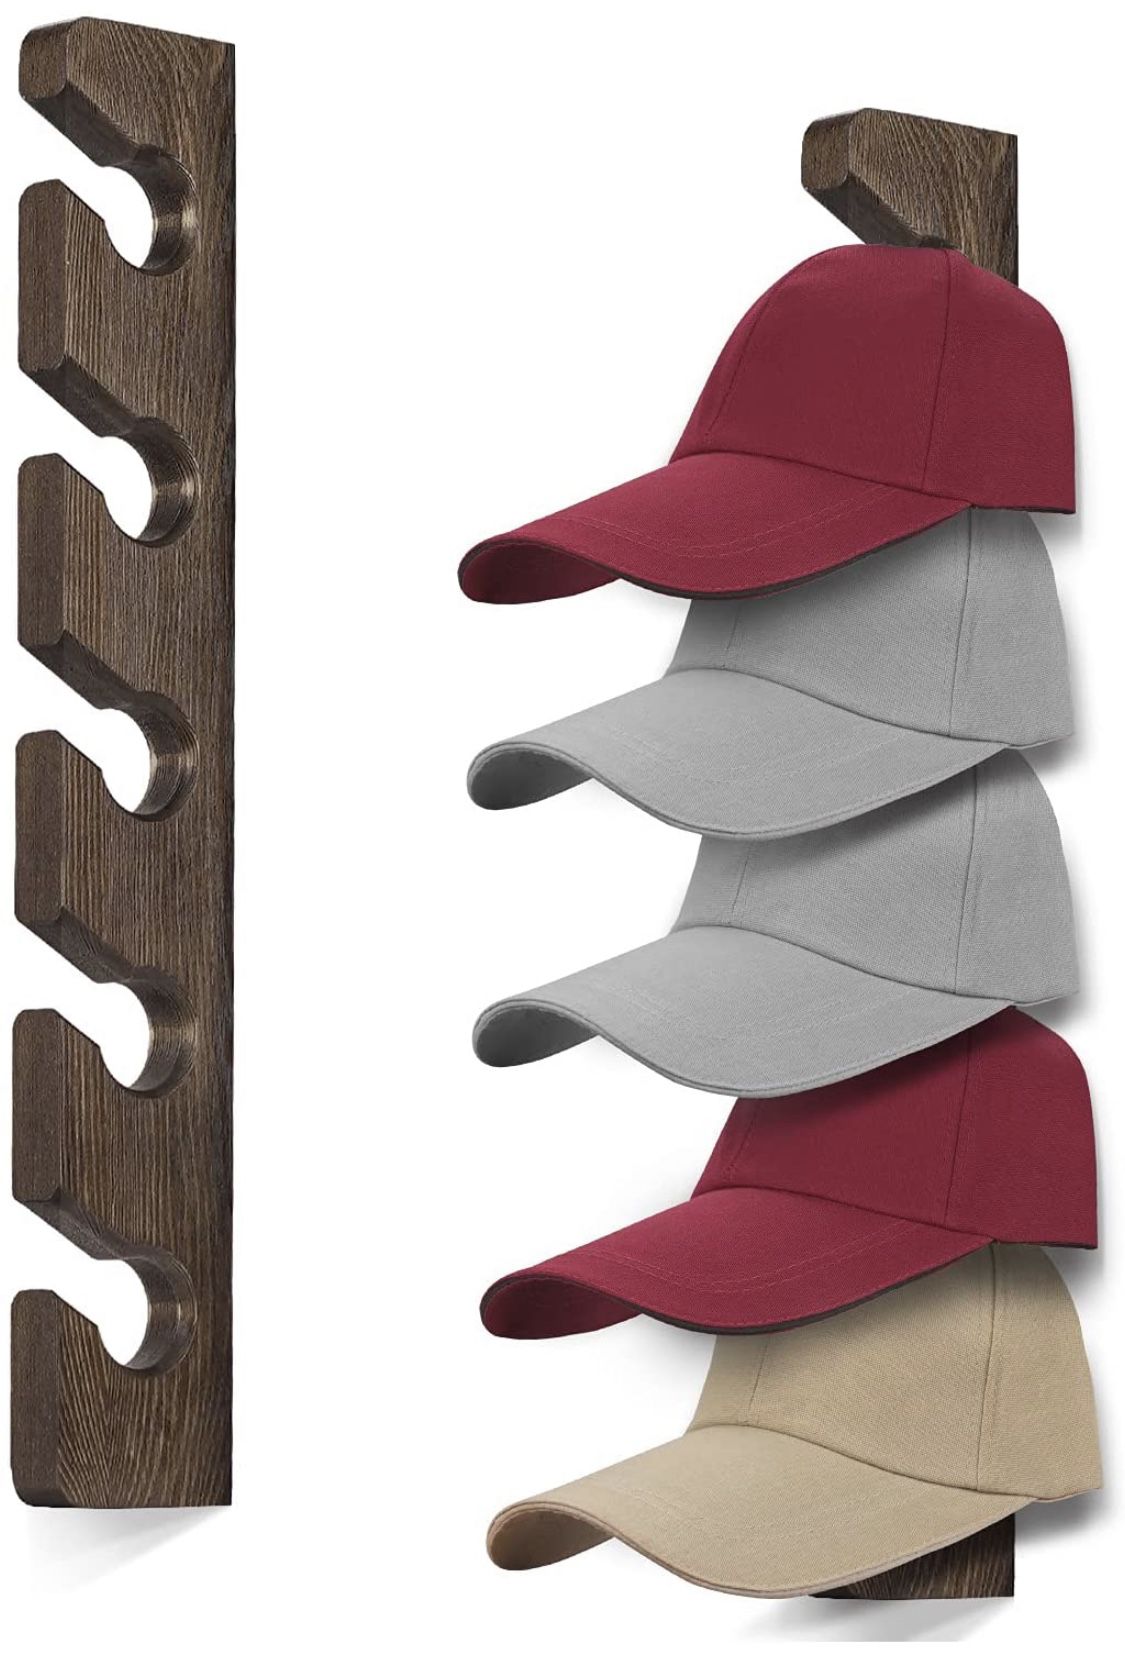 Keletop Hat Rack for Wall Baseball Cap Organizer Hanger (2 Pack) Modern Wooden Hat Holder Wall-Mounted Caps Display for Closet Door Bedroom Entryroom 